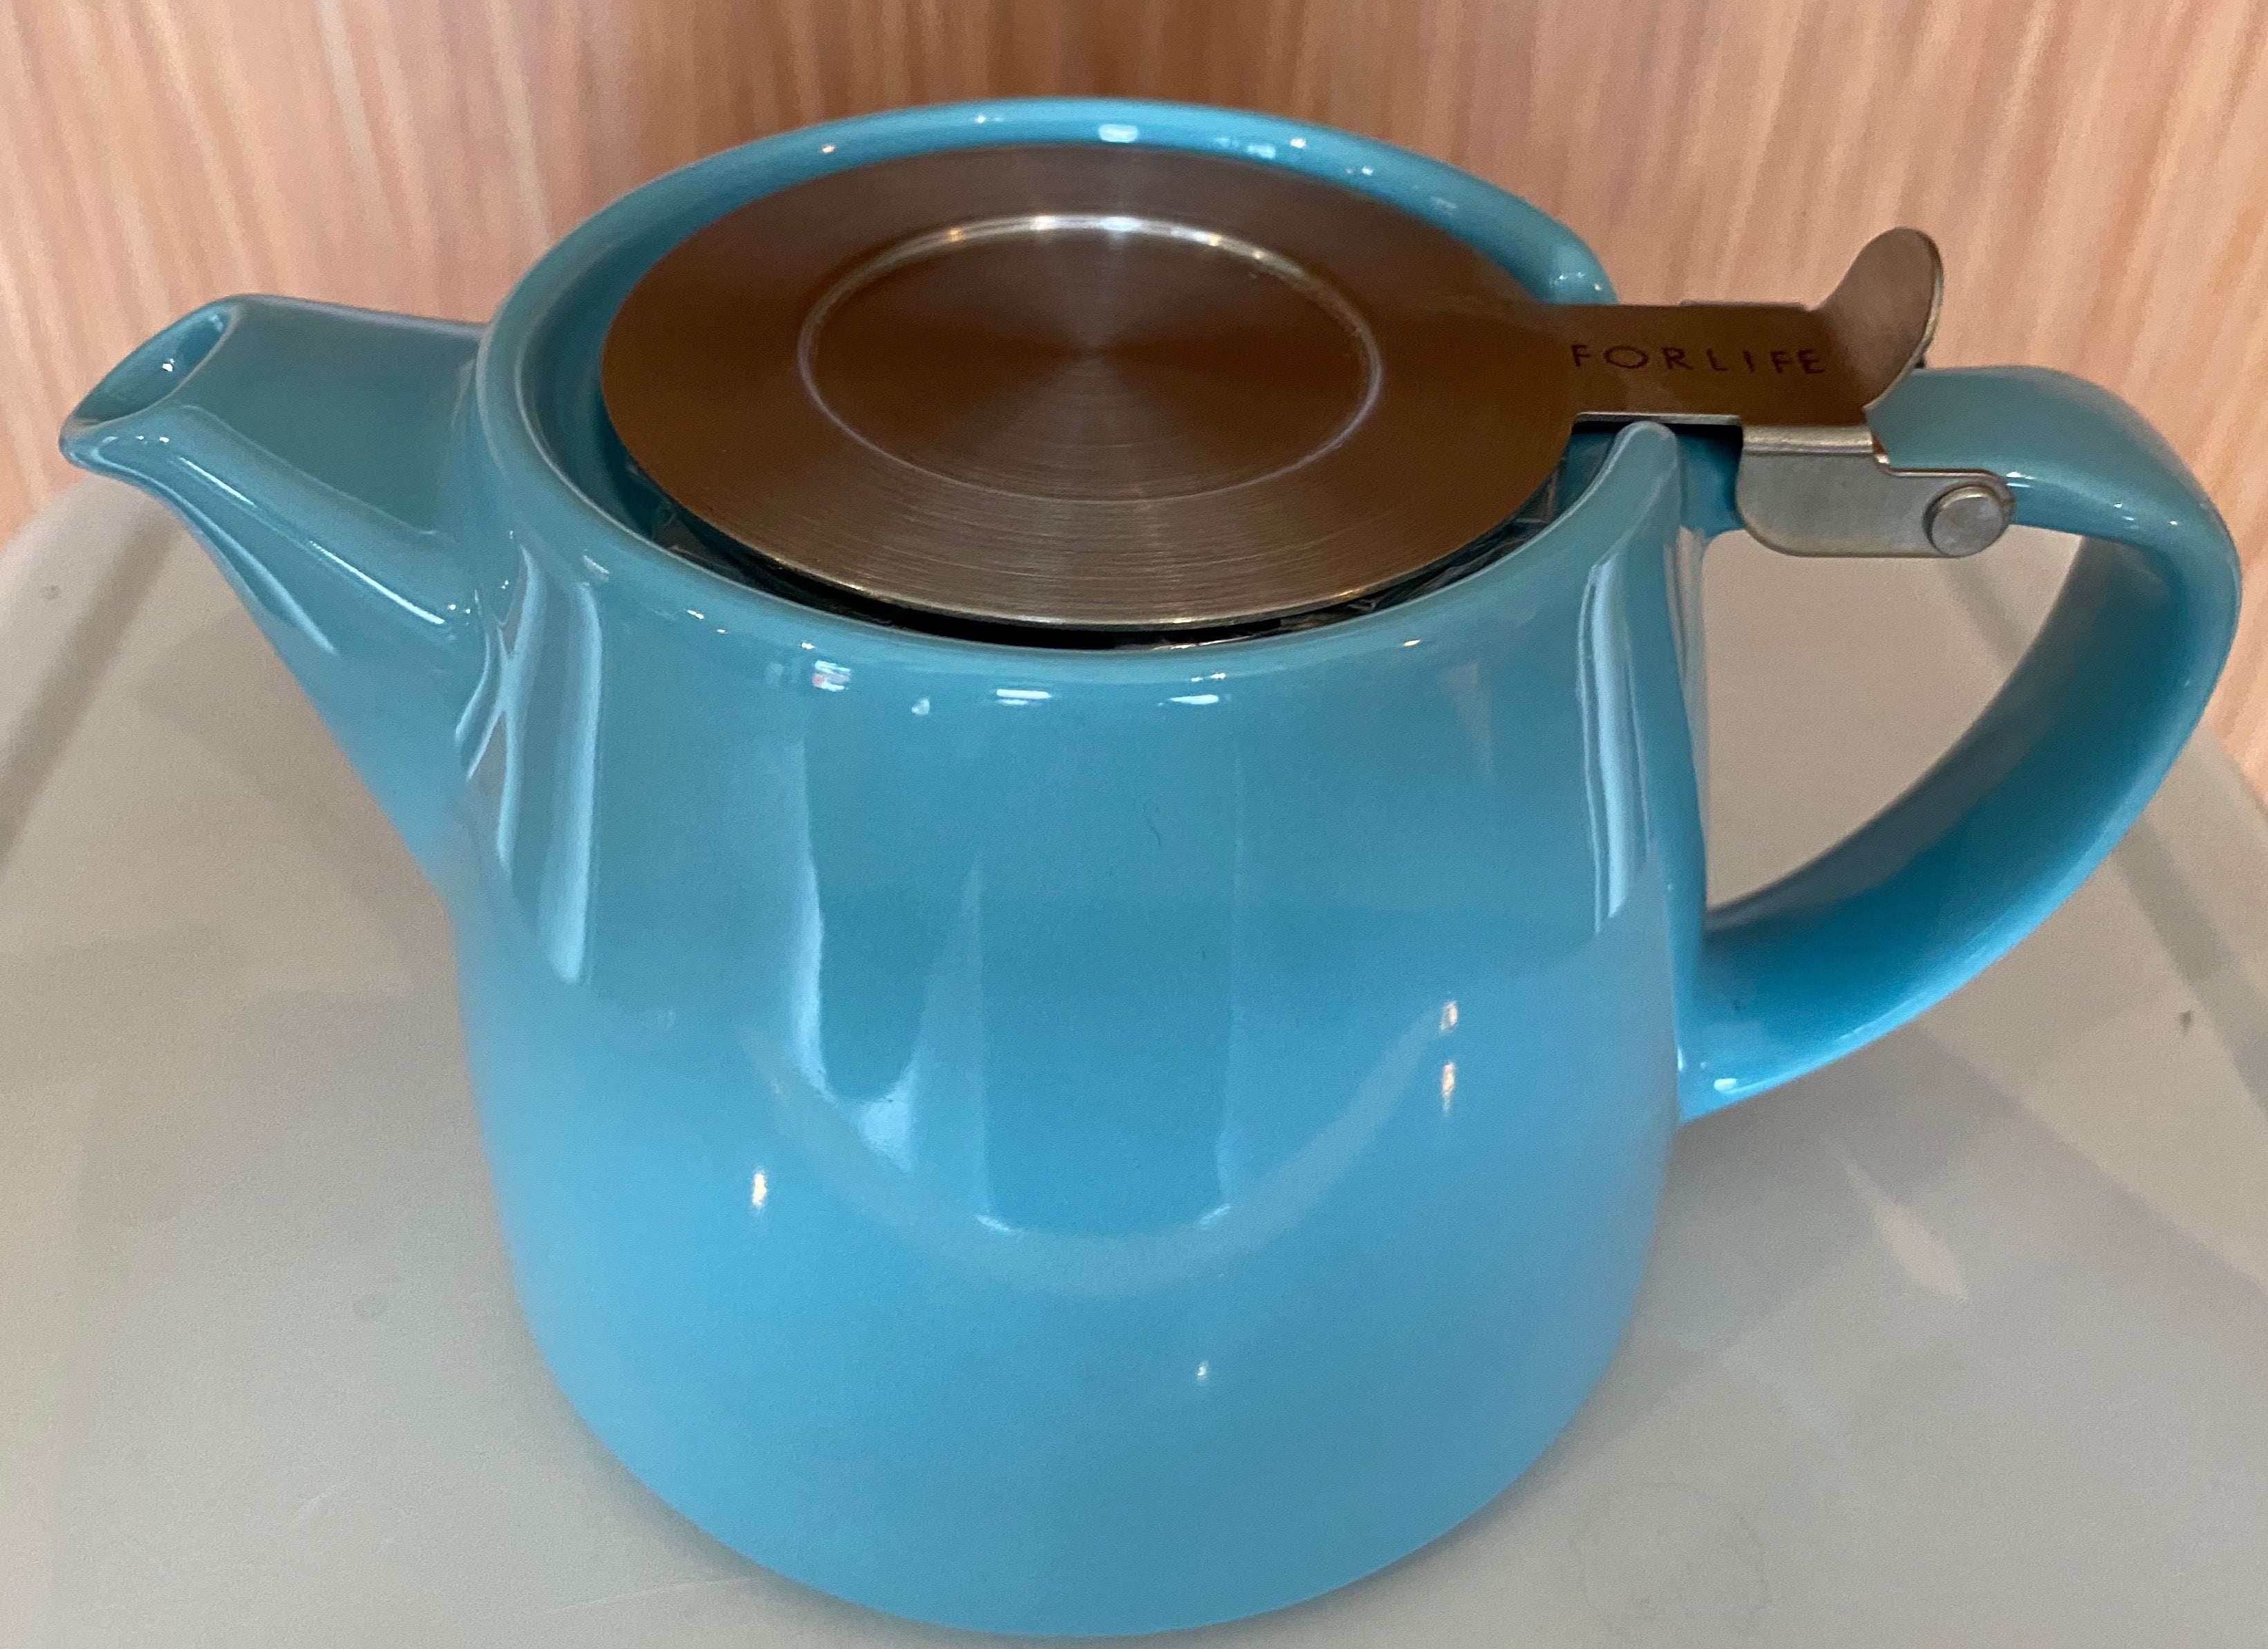 Turquoise stump teapot, For Life brand